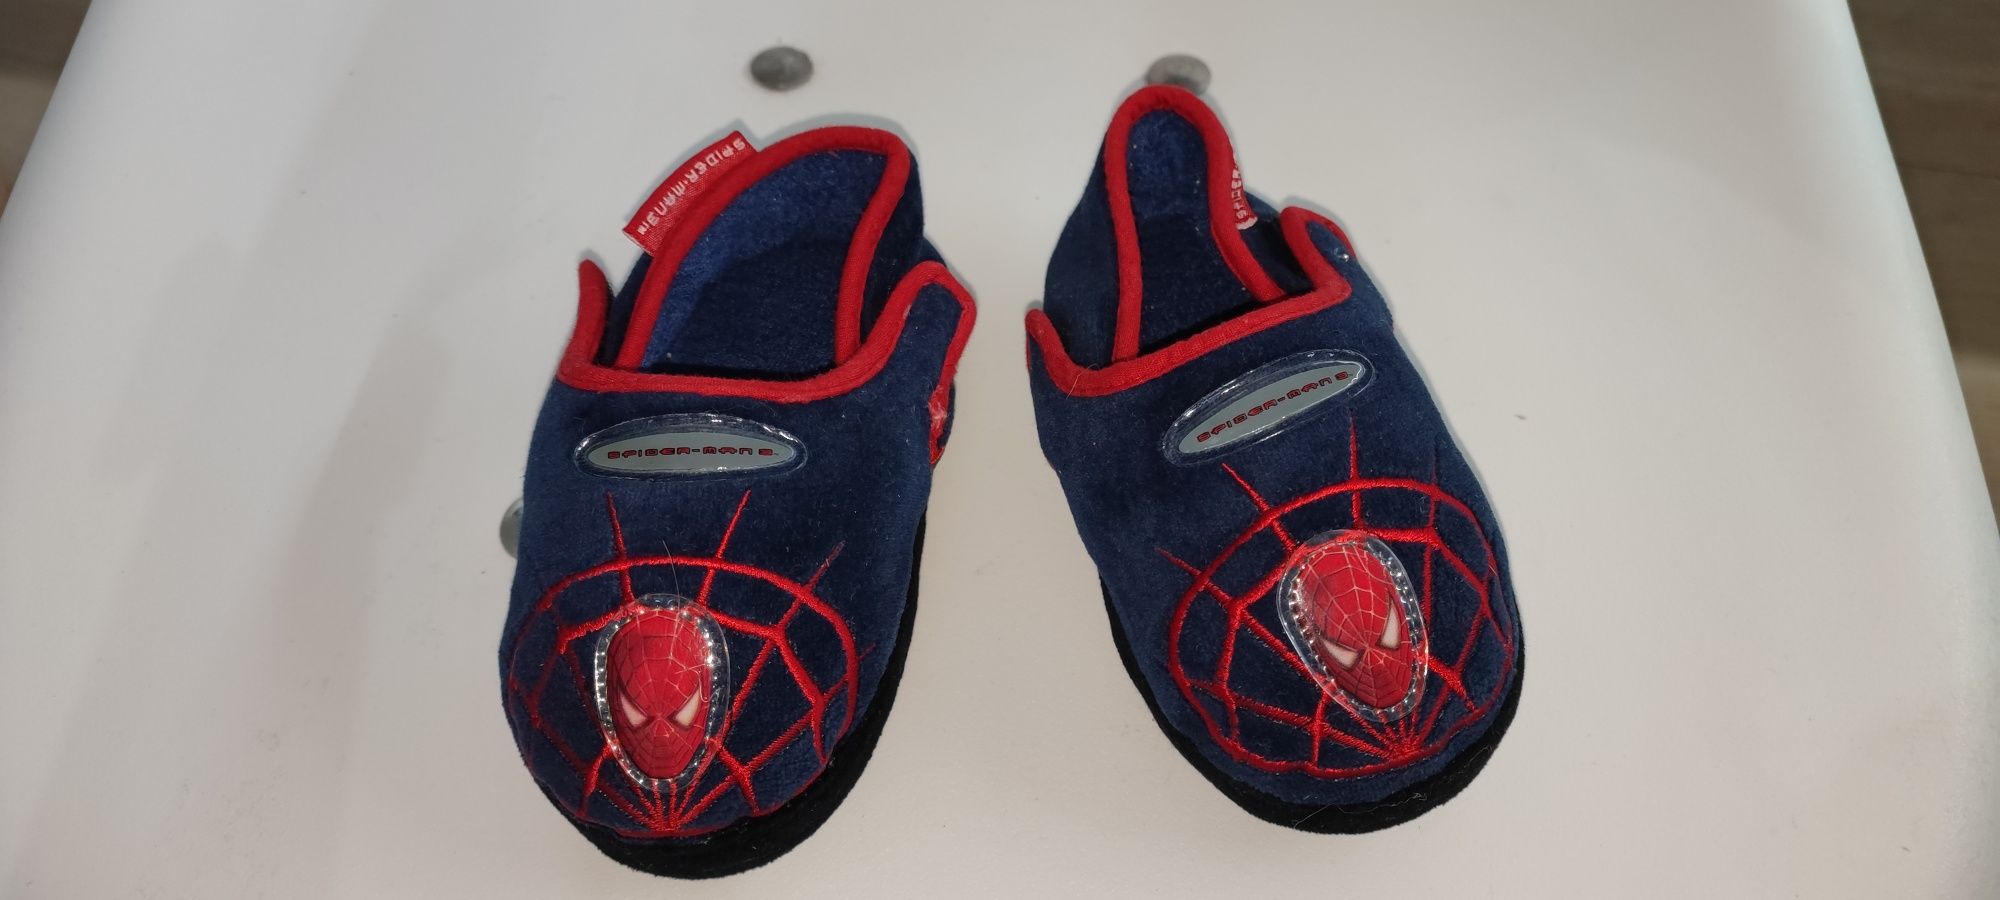 Pantofle kapcie chłopięce Spider-Man rozmiar 23-24